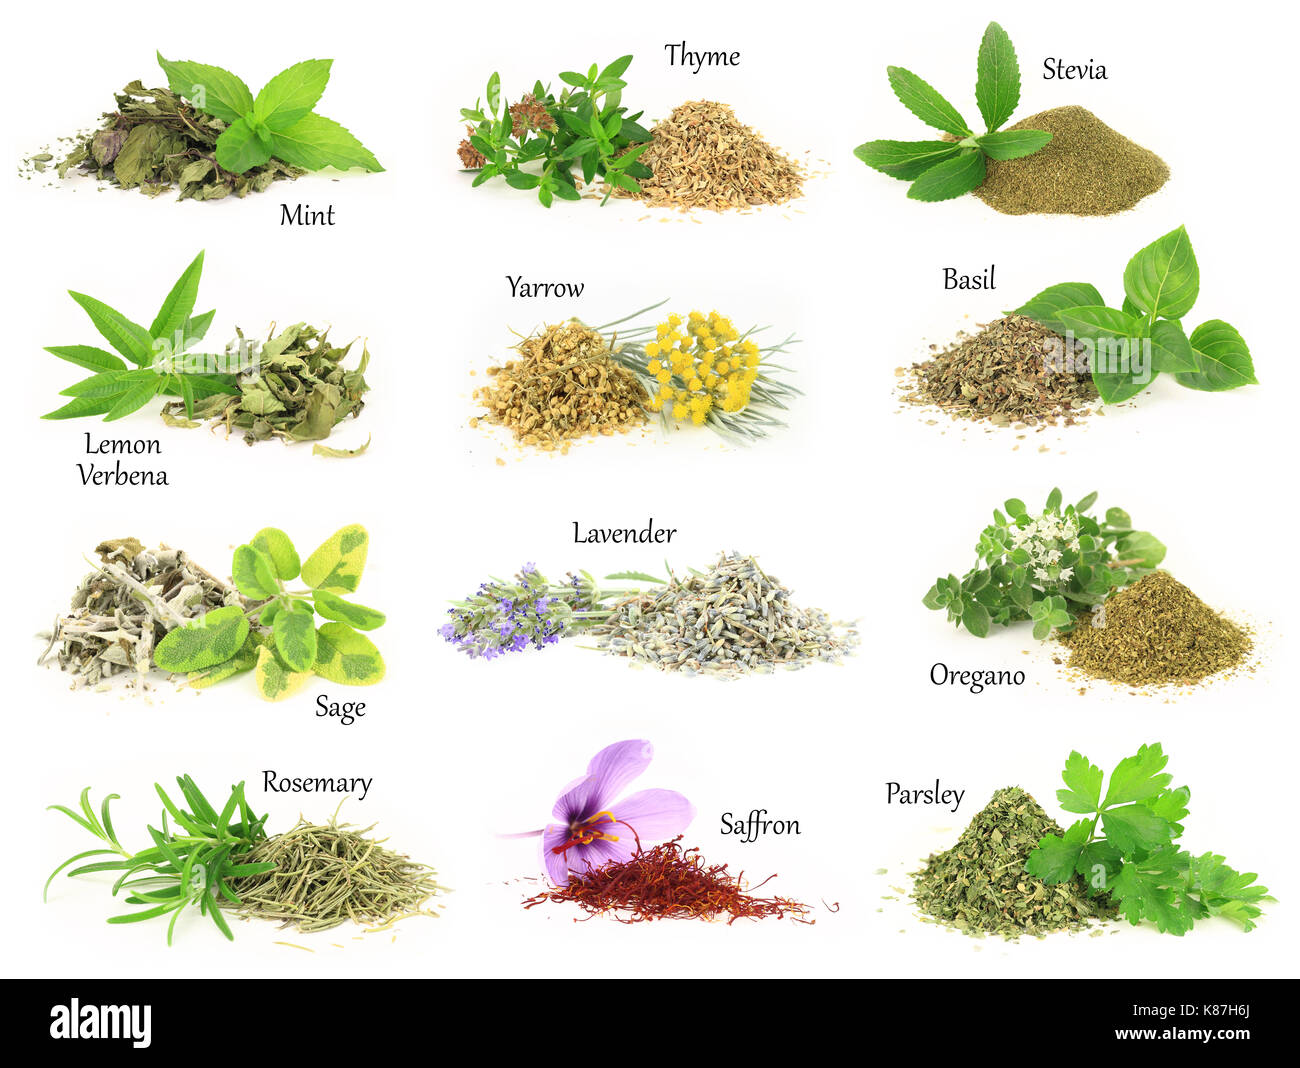 https://c8.alamy.com/compfr/k87h6j/collection-d-herbes-aromatiques-fraiches-et-seches-k87h6j.jpg